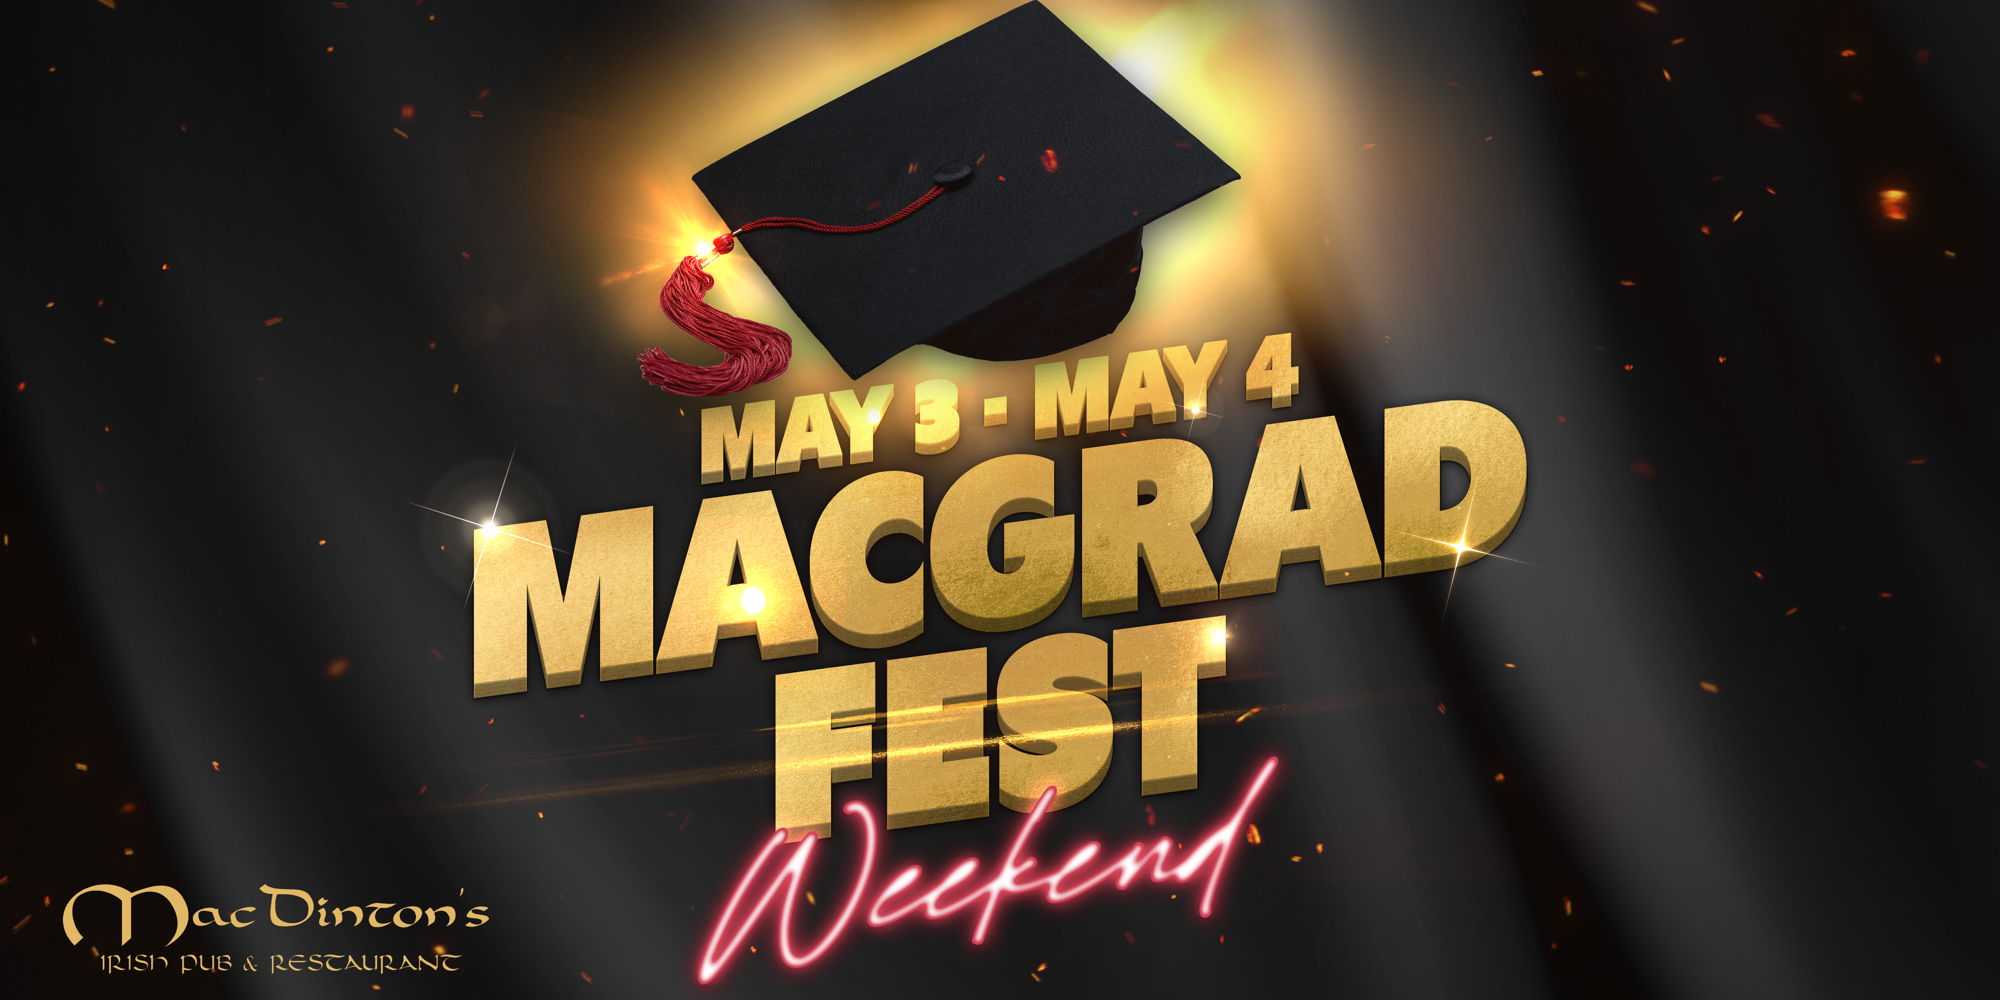 MacGrad Fest Weekend! promotional image